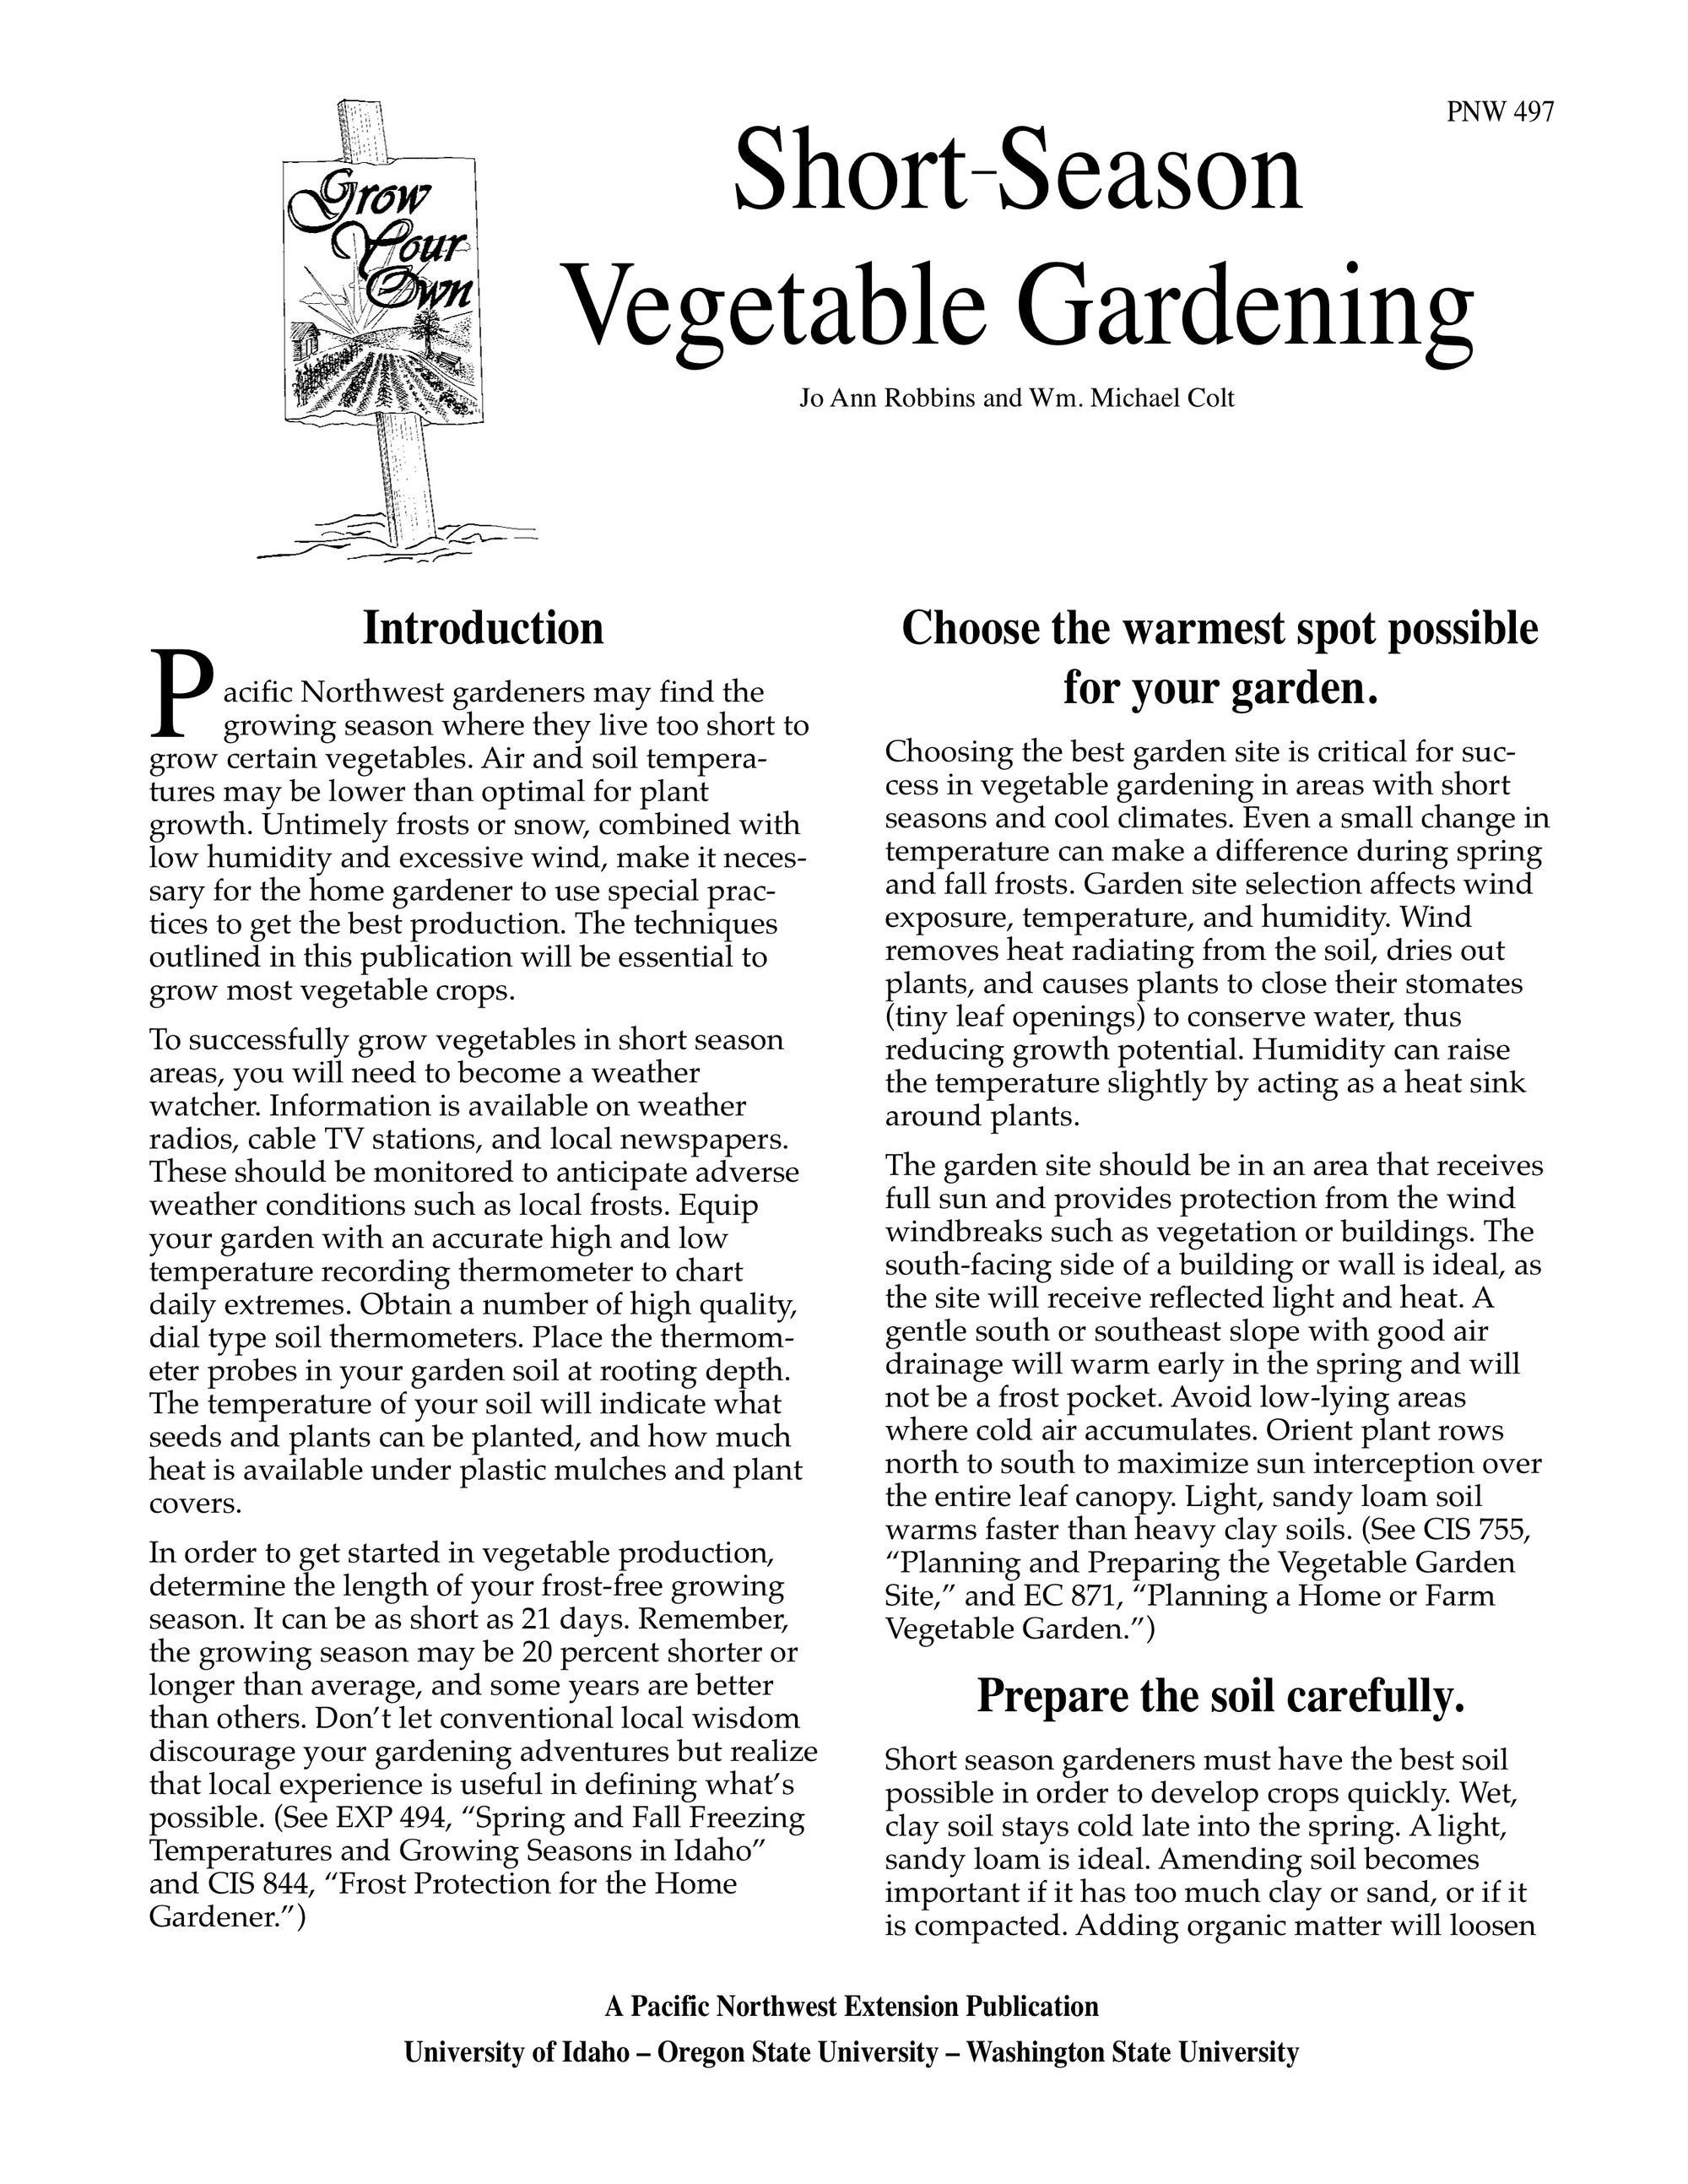 Image of Short-Season Vegetable Gardening publication